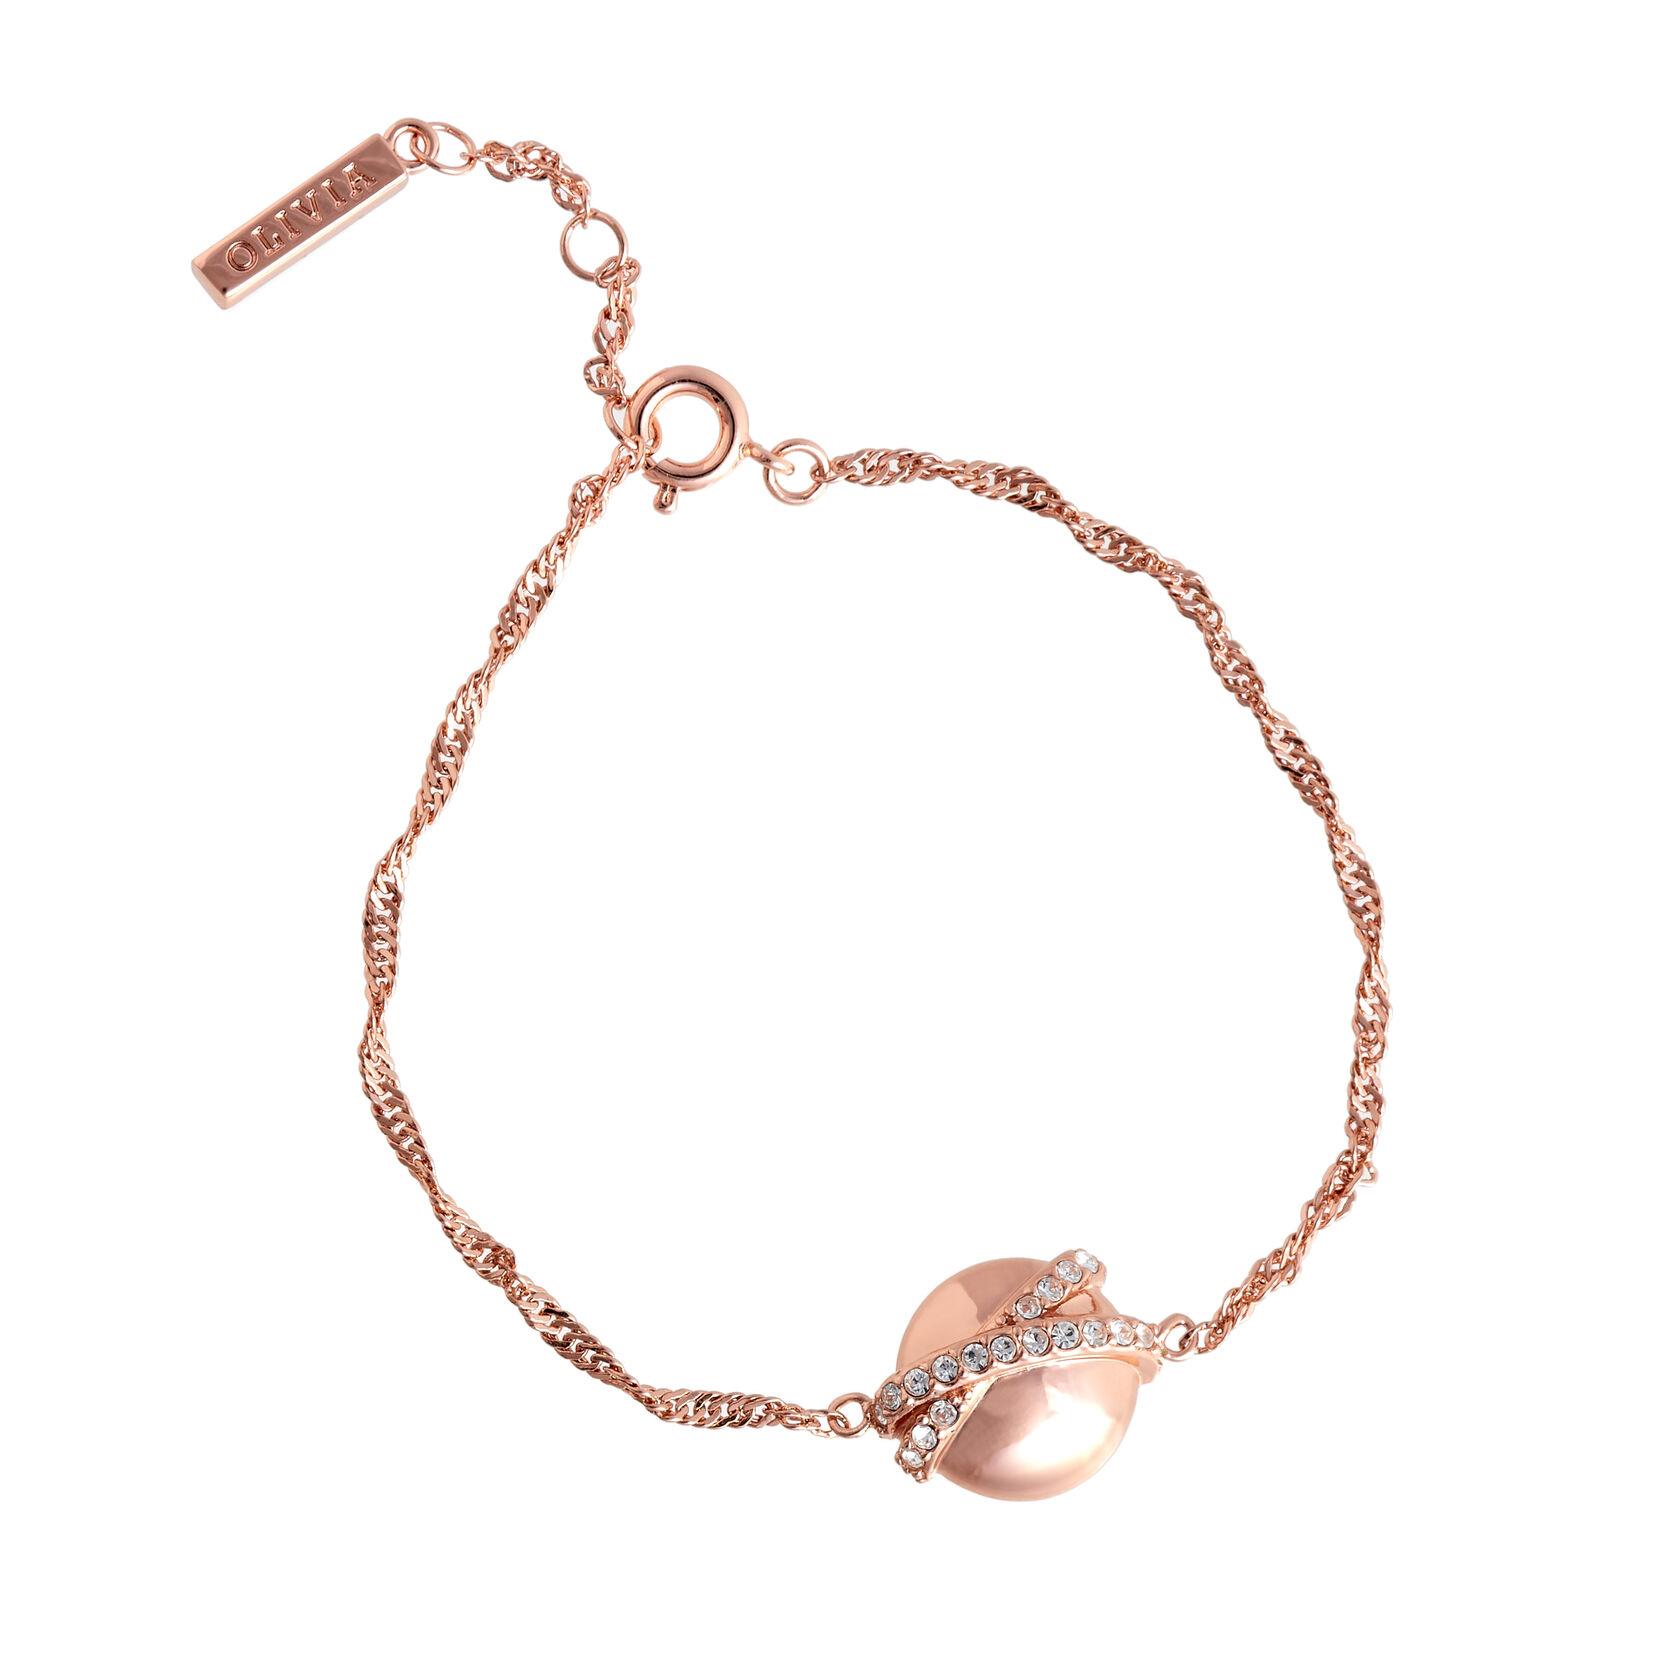 Celestial Rose Gold Planet Twist Chain Bracelet